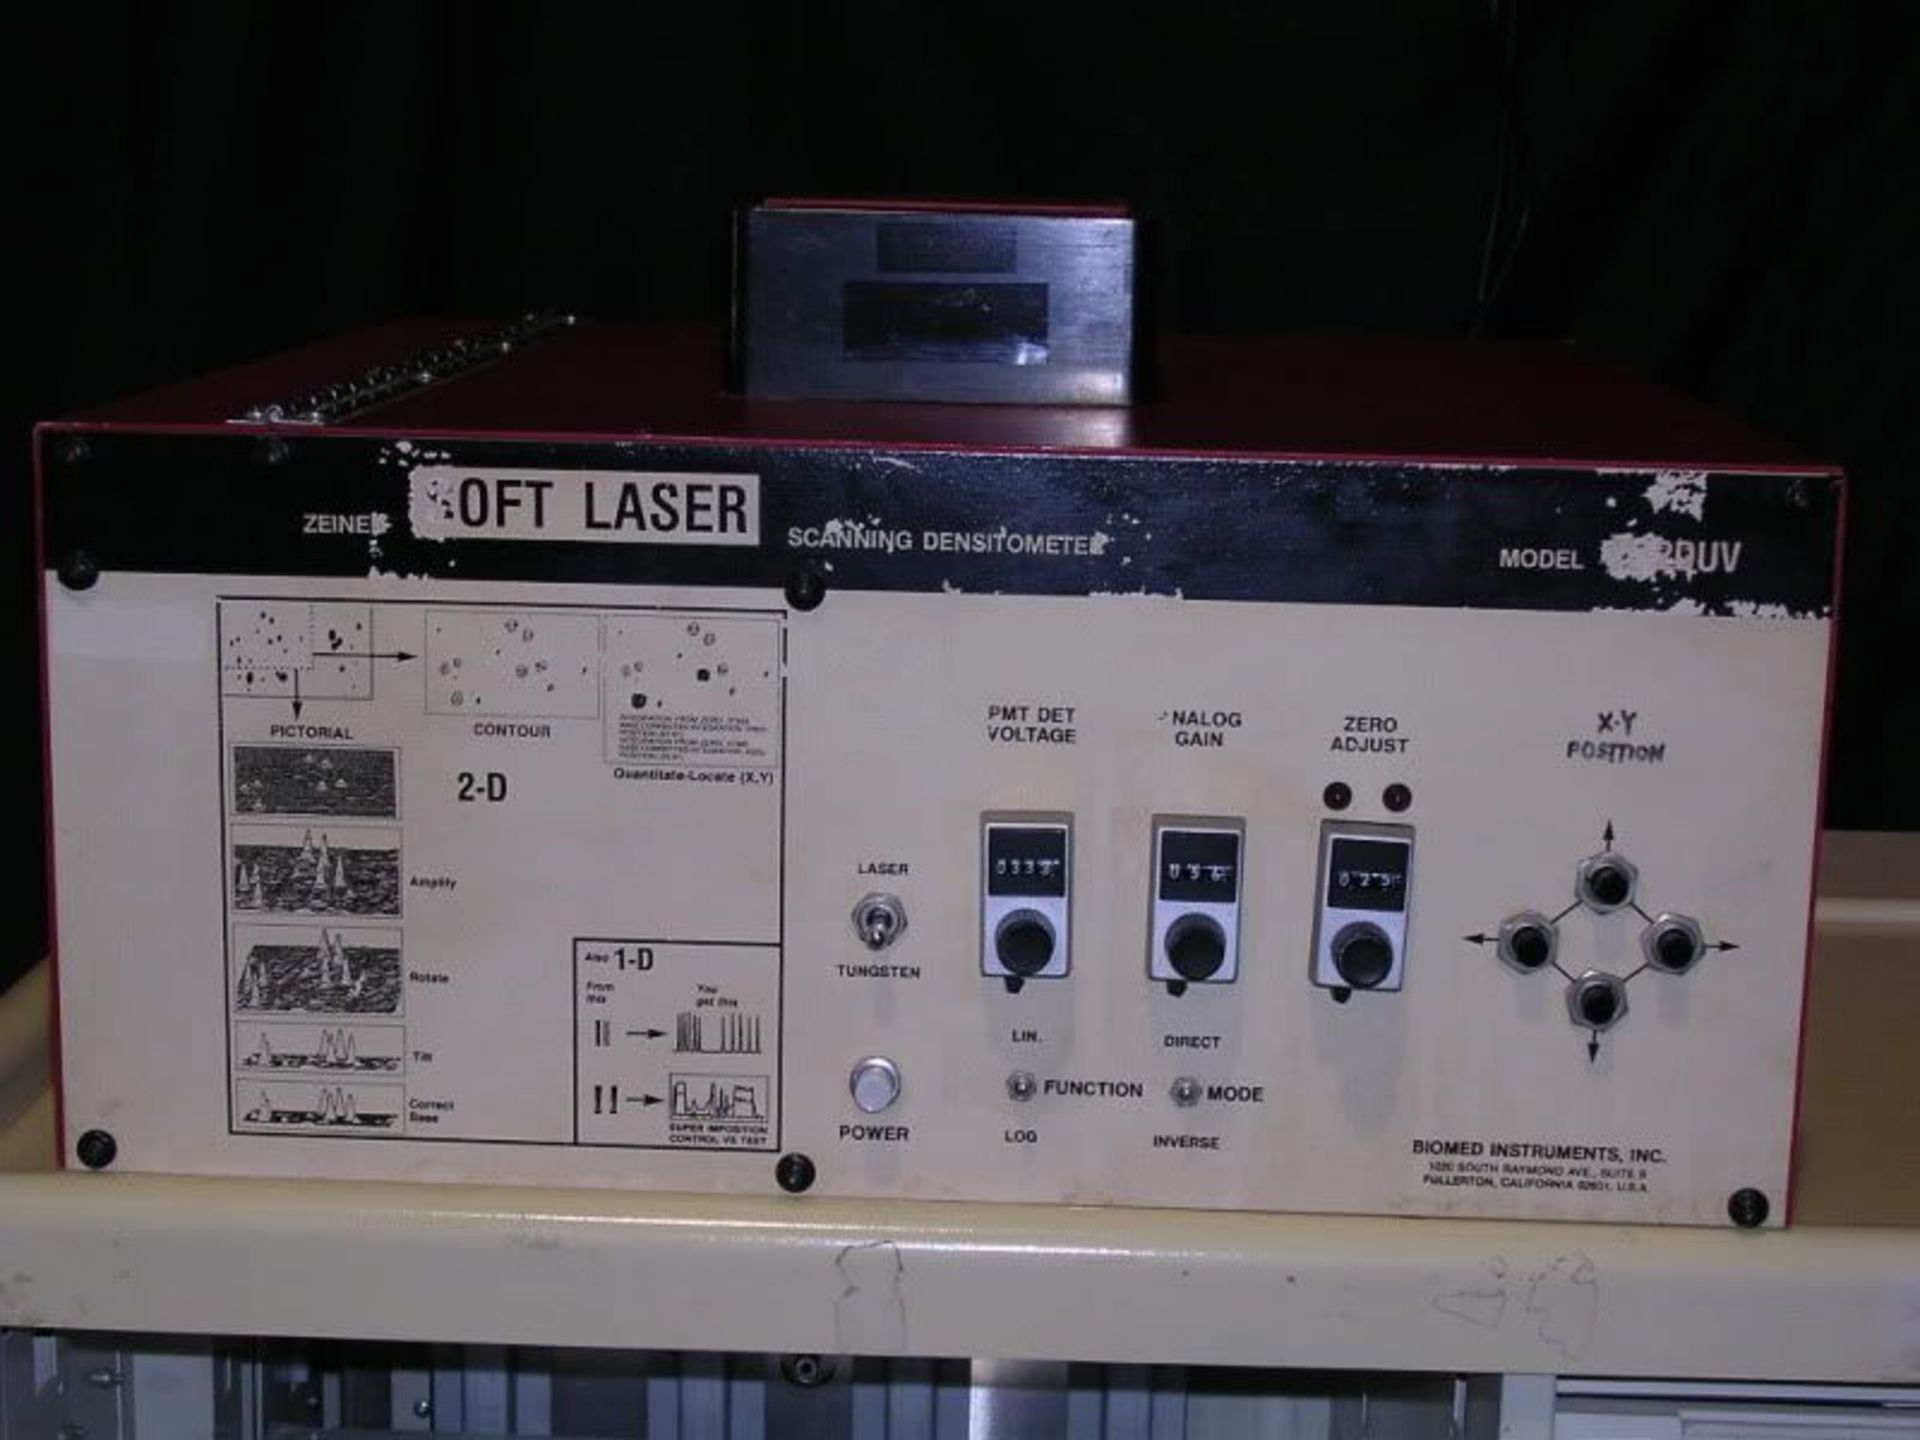 Zeineh Soft Laser Scanning Densitometer Model # SL-2DUV, Qty 1, 220749028910